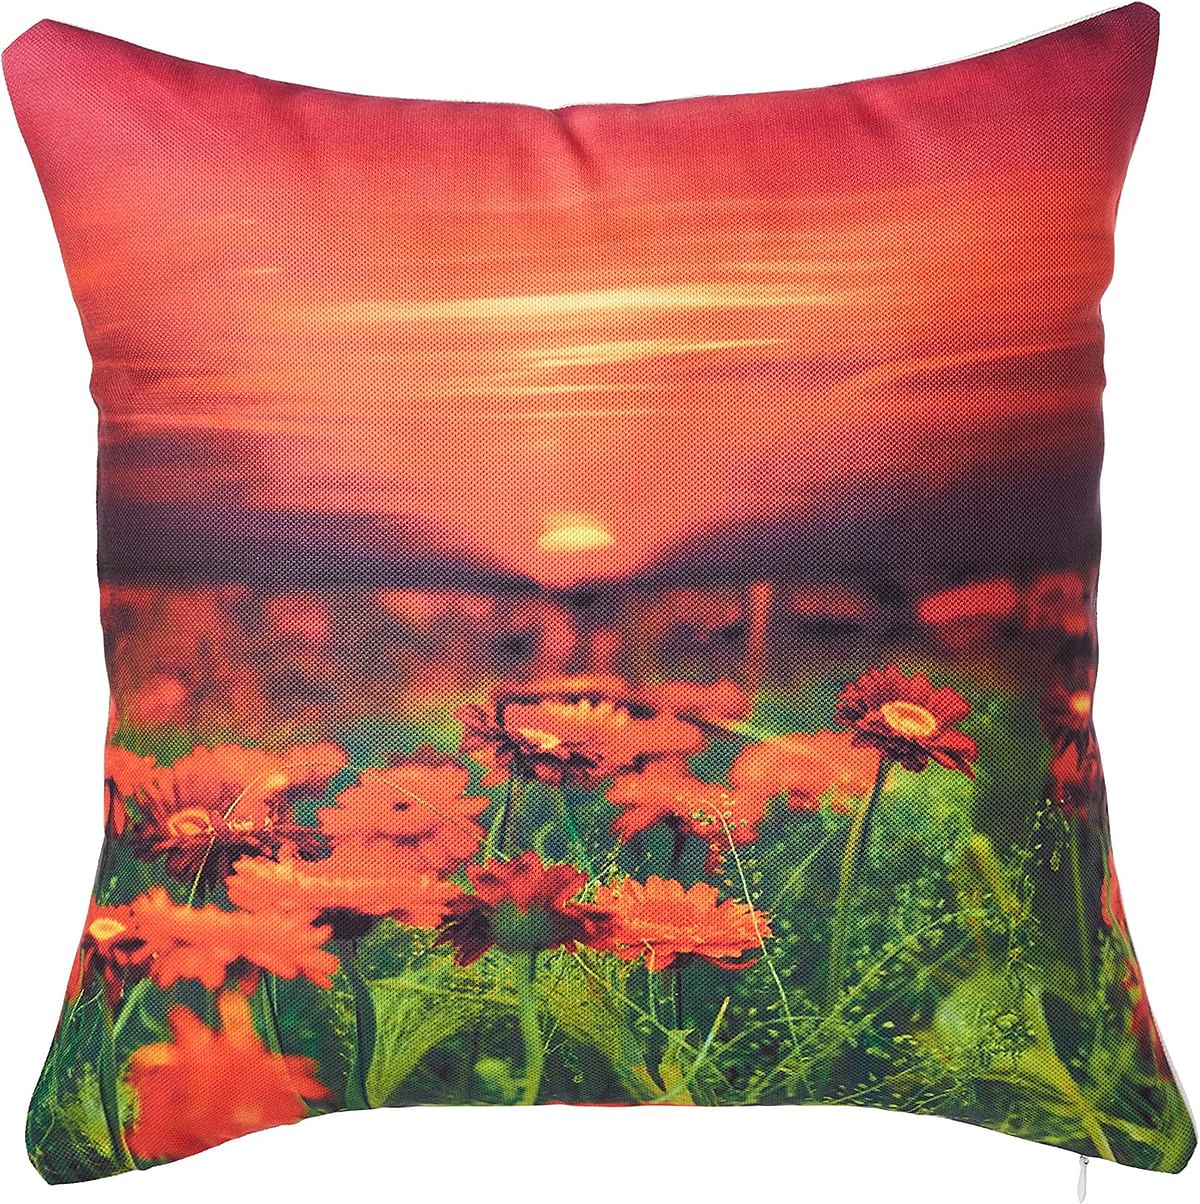 Bonamaison Decorative Throw Pillow Cover, Multi-Colour, 45 x 45 cm, BNMYST1924